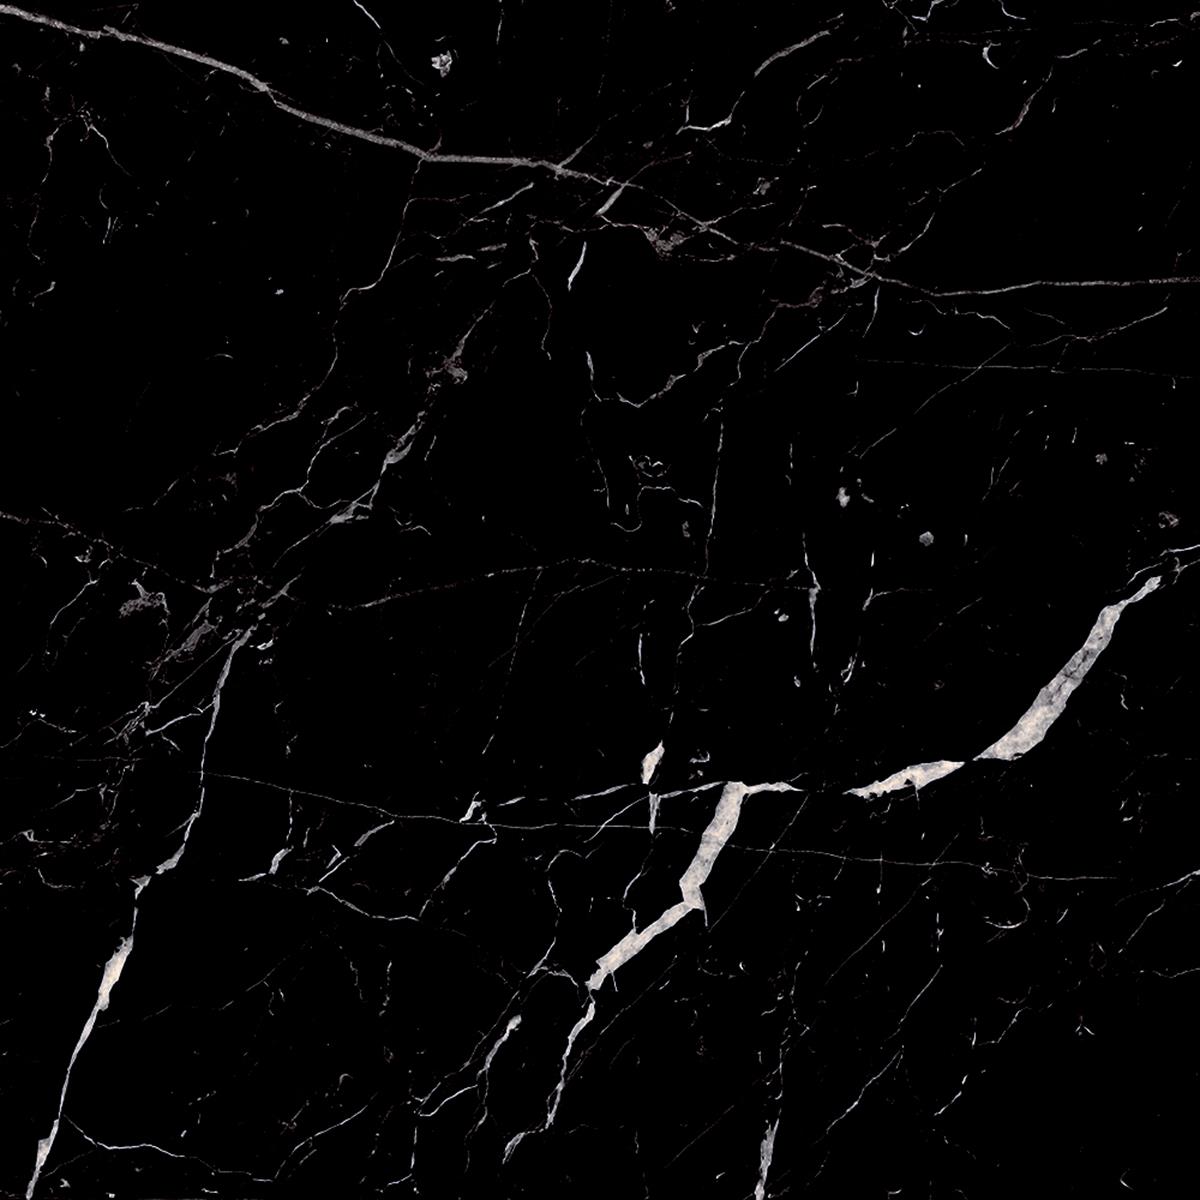 Płytka gresowa MARBELLO BLACK POLISHED 60×60 imitacja kamienia/marmuru